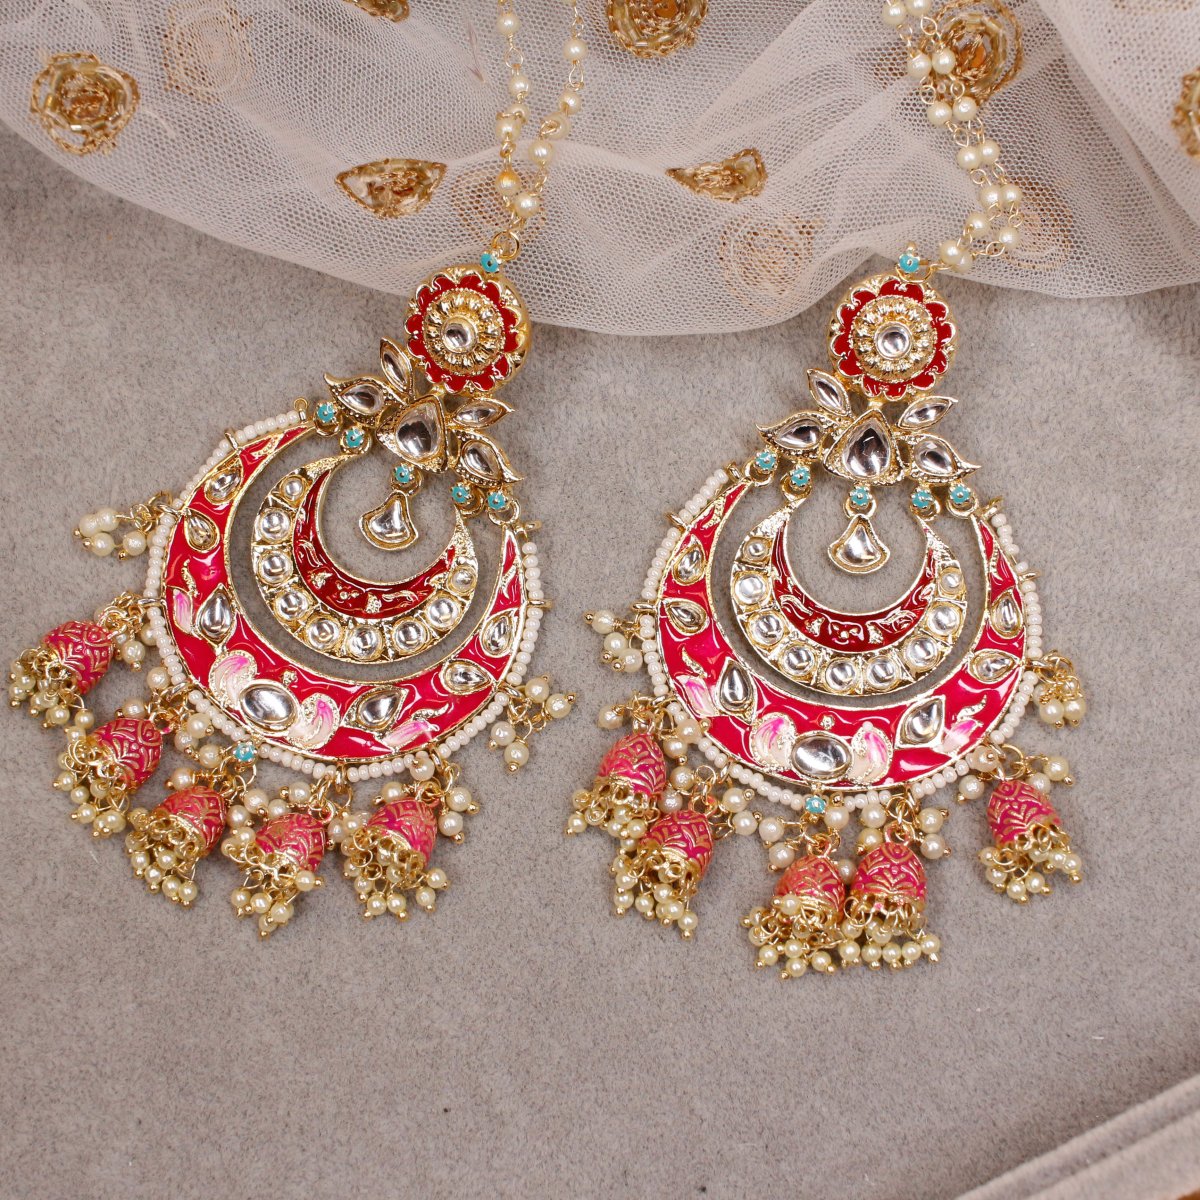 Mansi Painted ChandBali Earrings - SOKORA JEWELSMansi Painted ChandBali Earrings